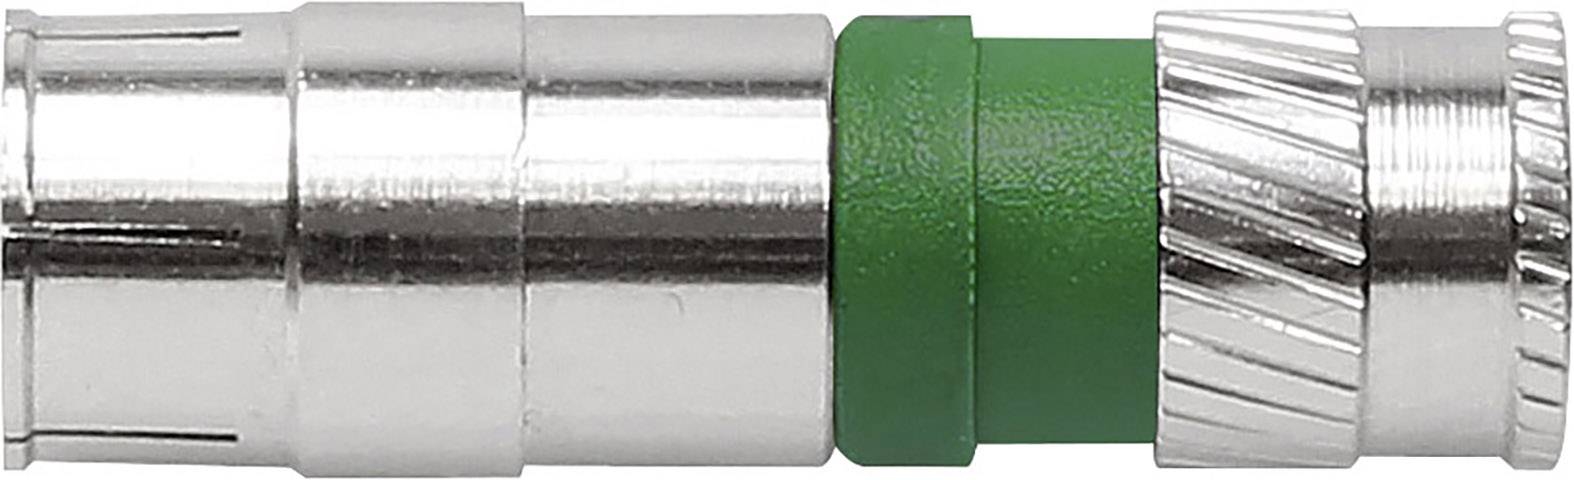 AXING Koax-IEC-Stecker-Kompression Kabel-Durchmesser: 4.9 mm